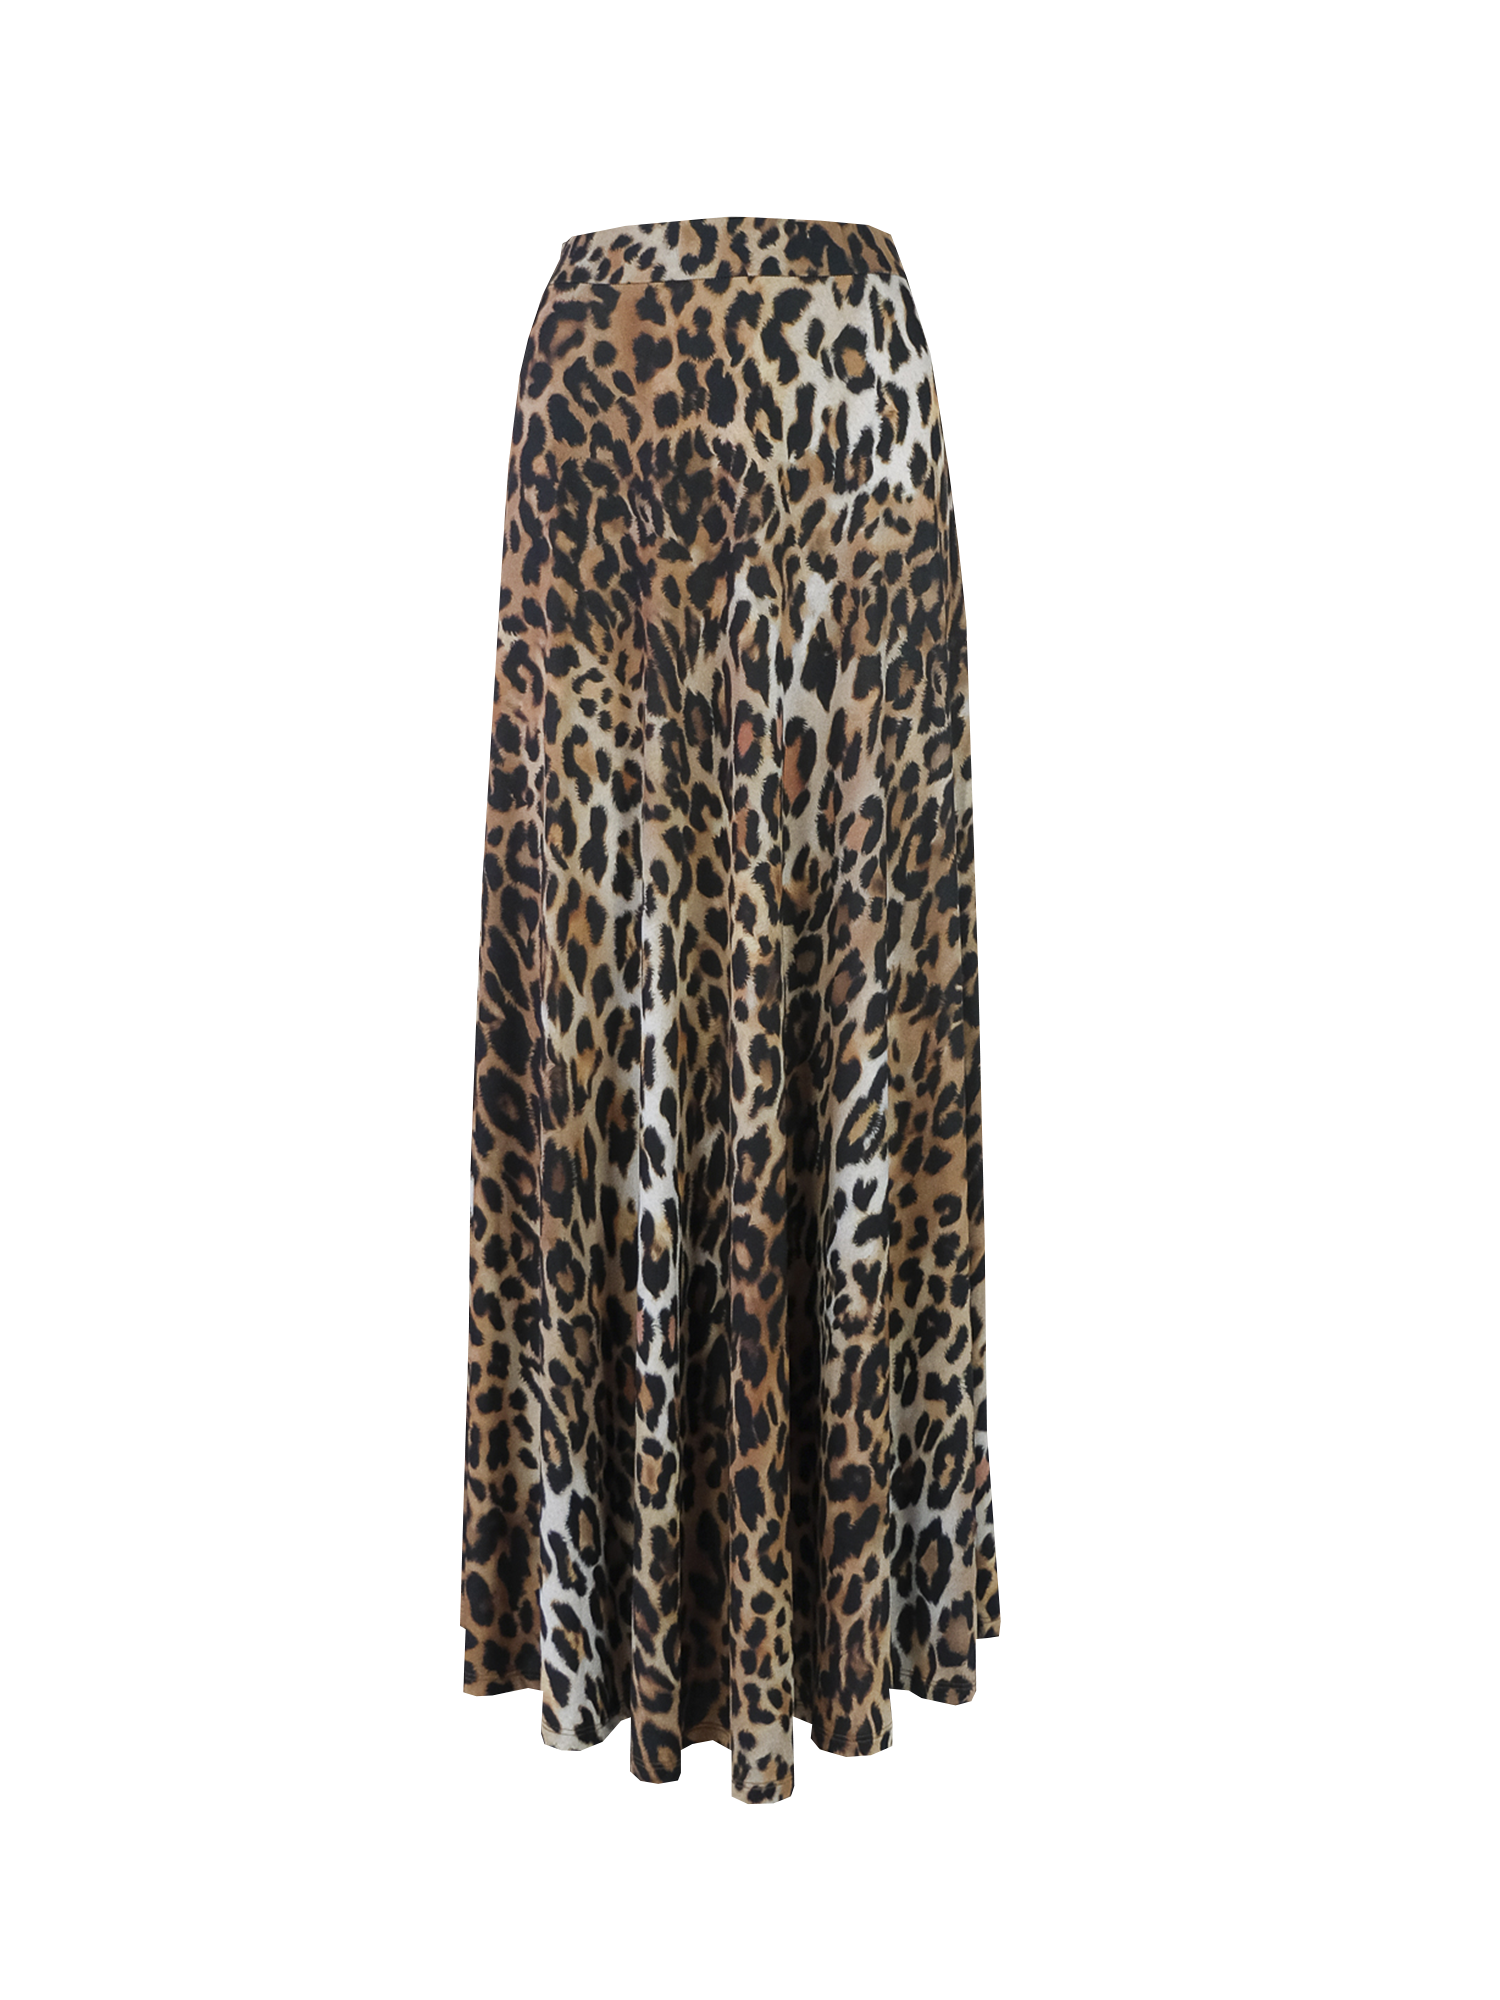 TOSCA - long skirt in print animalier lycra